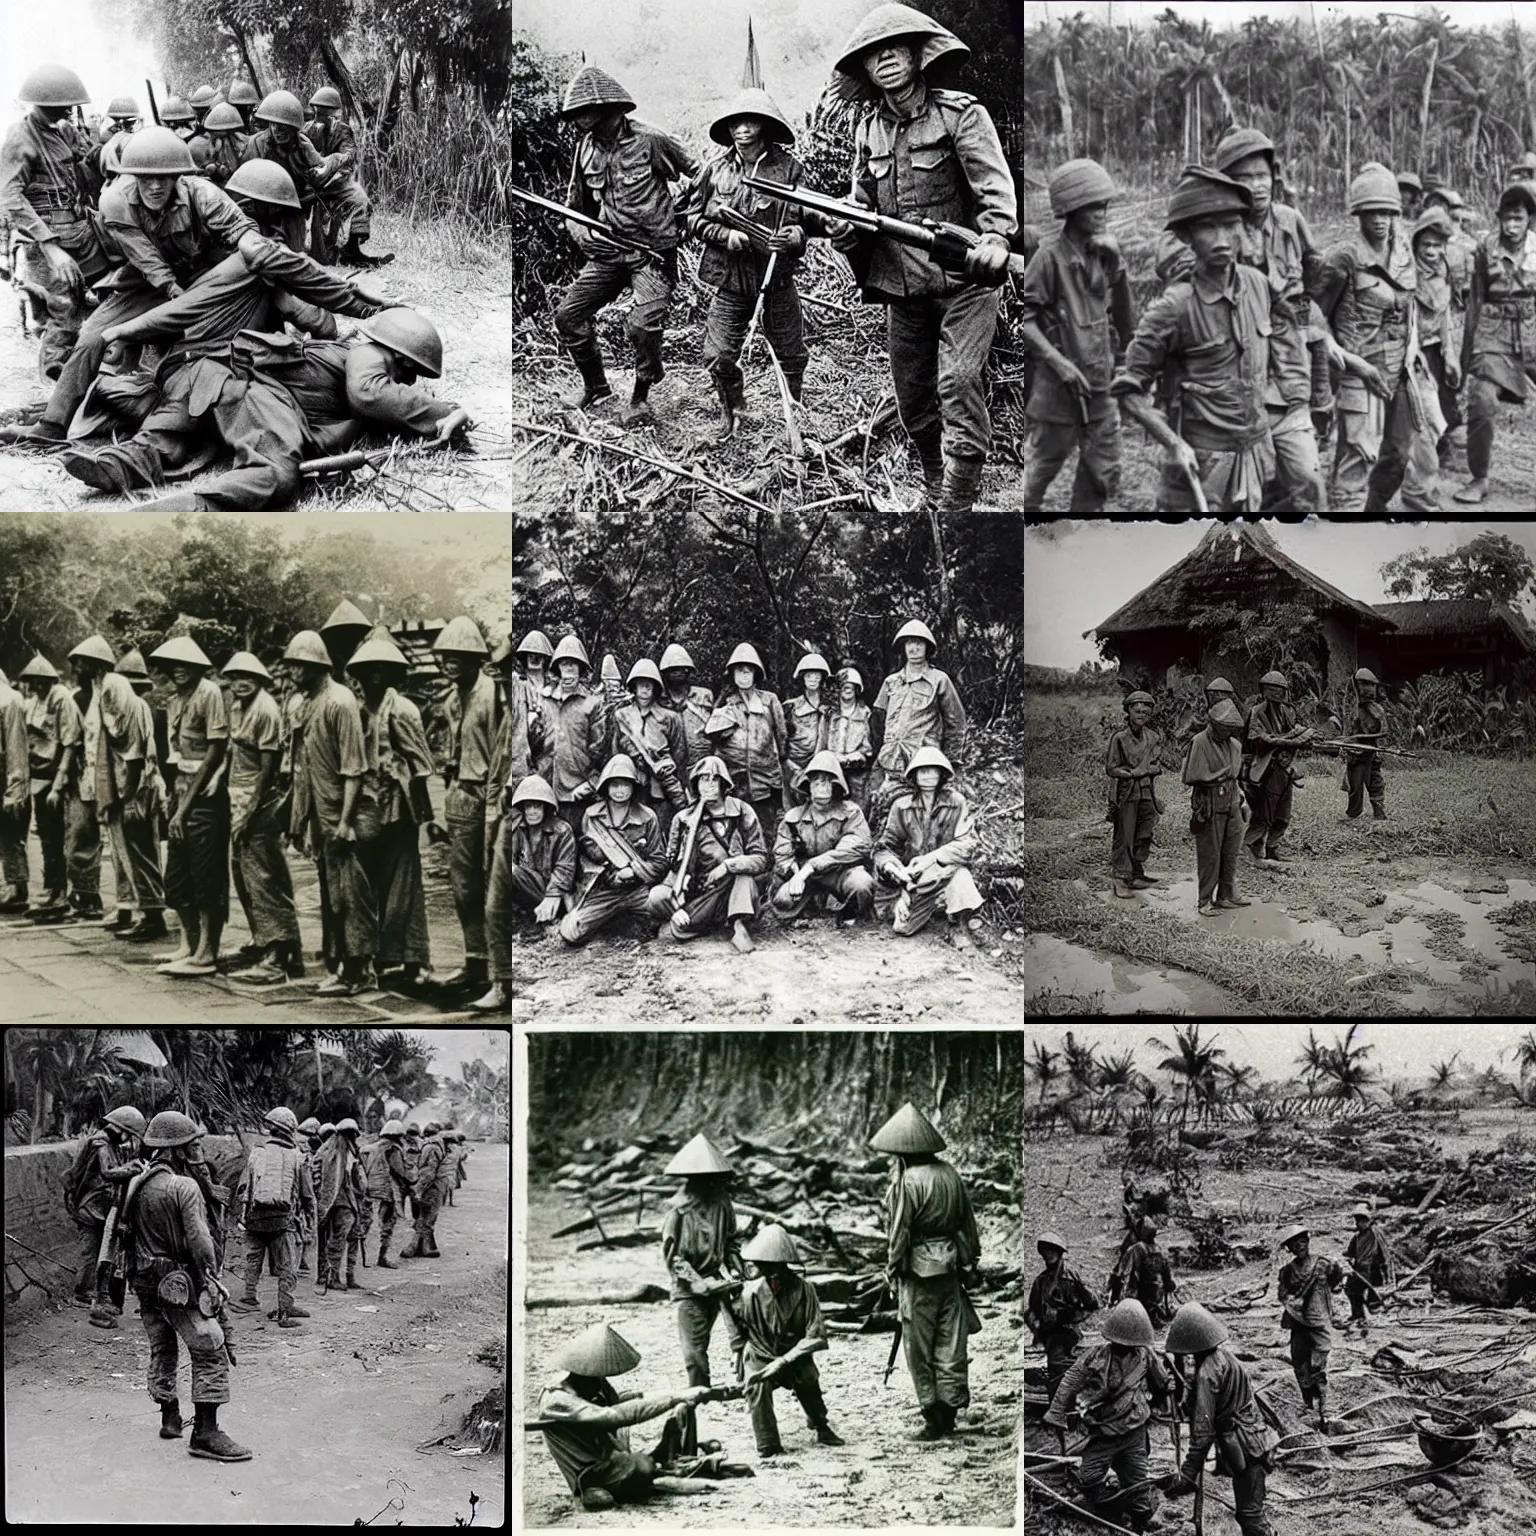 Prompt: “Vietnam war, 1900’s photo”